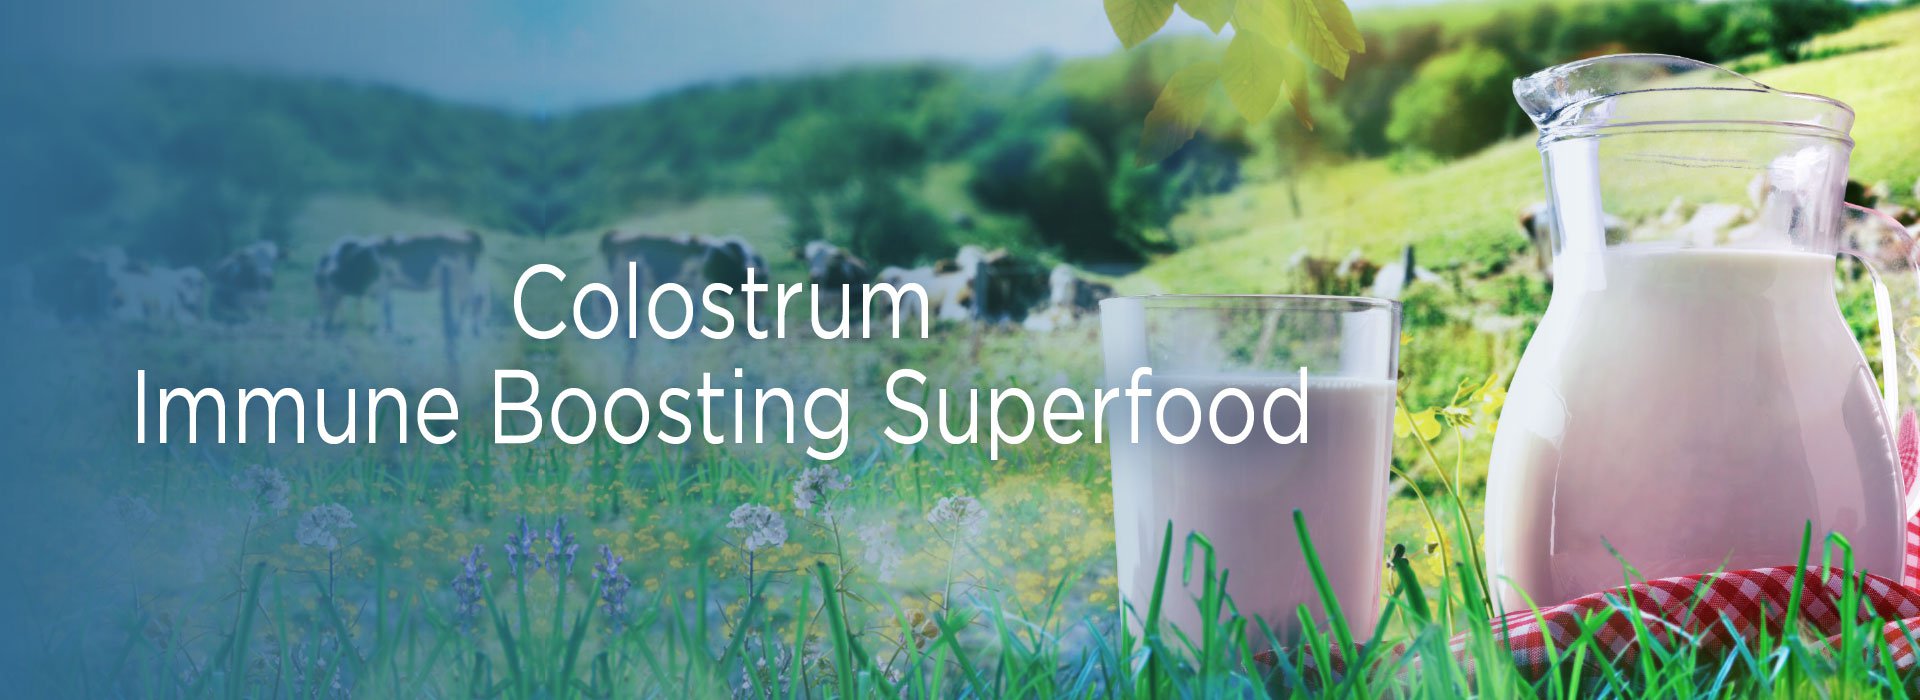 New Image International:Colostrum Immune Boosting Super Food